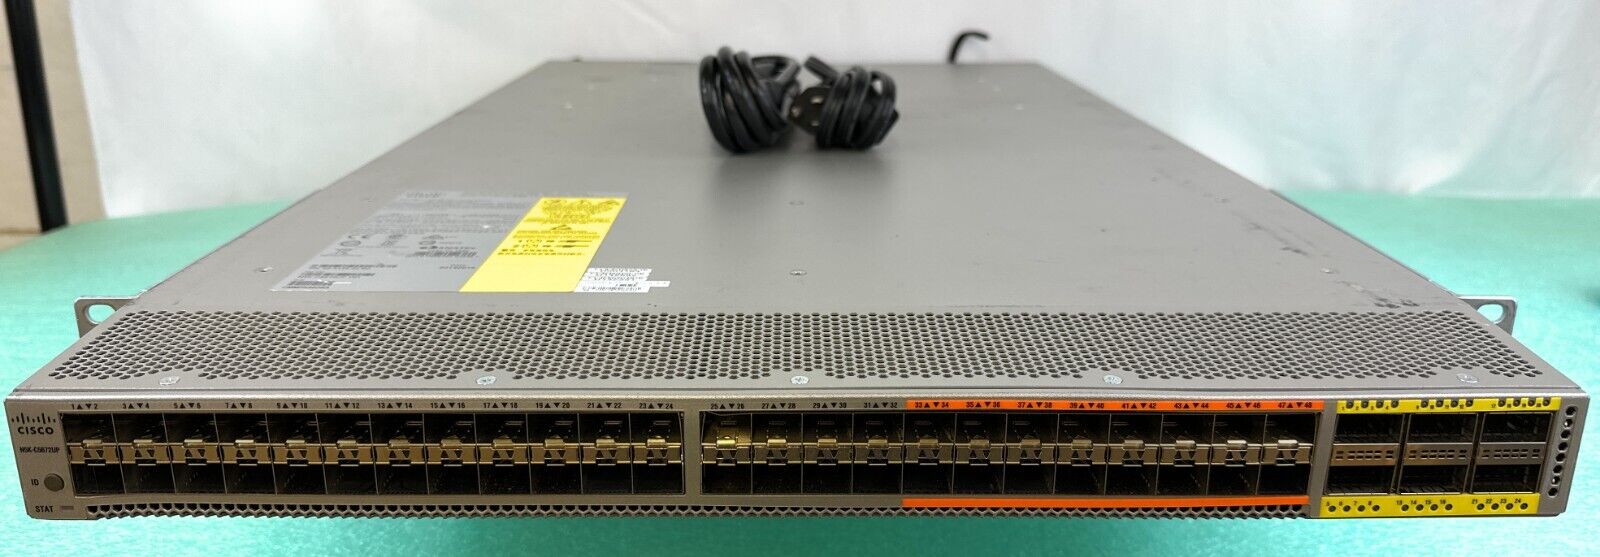 Cisco NEXUS 5672UP N5K-C5672UP 48x SFP+ 6x QSFP+ Network Switch Dual Power NO OS